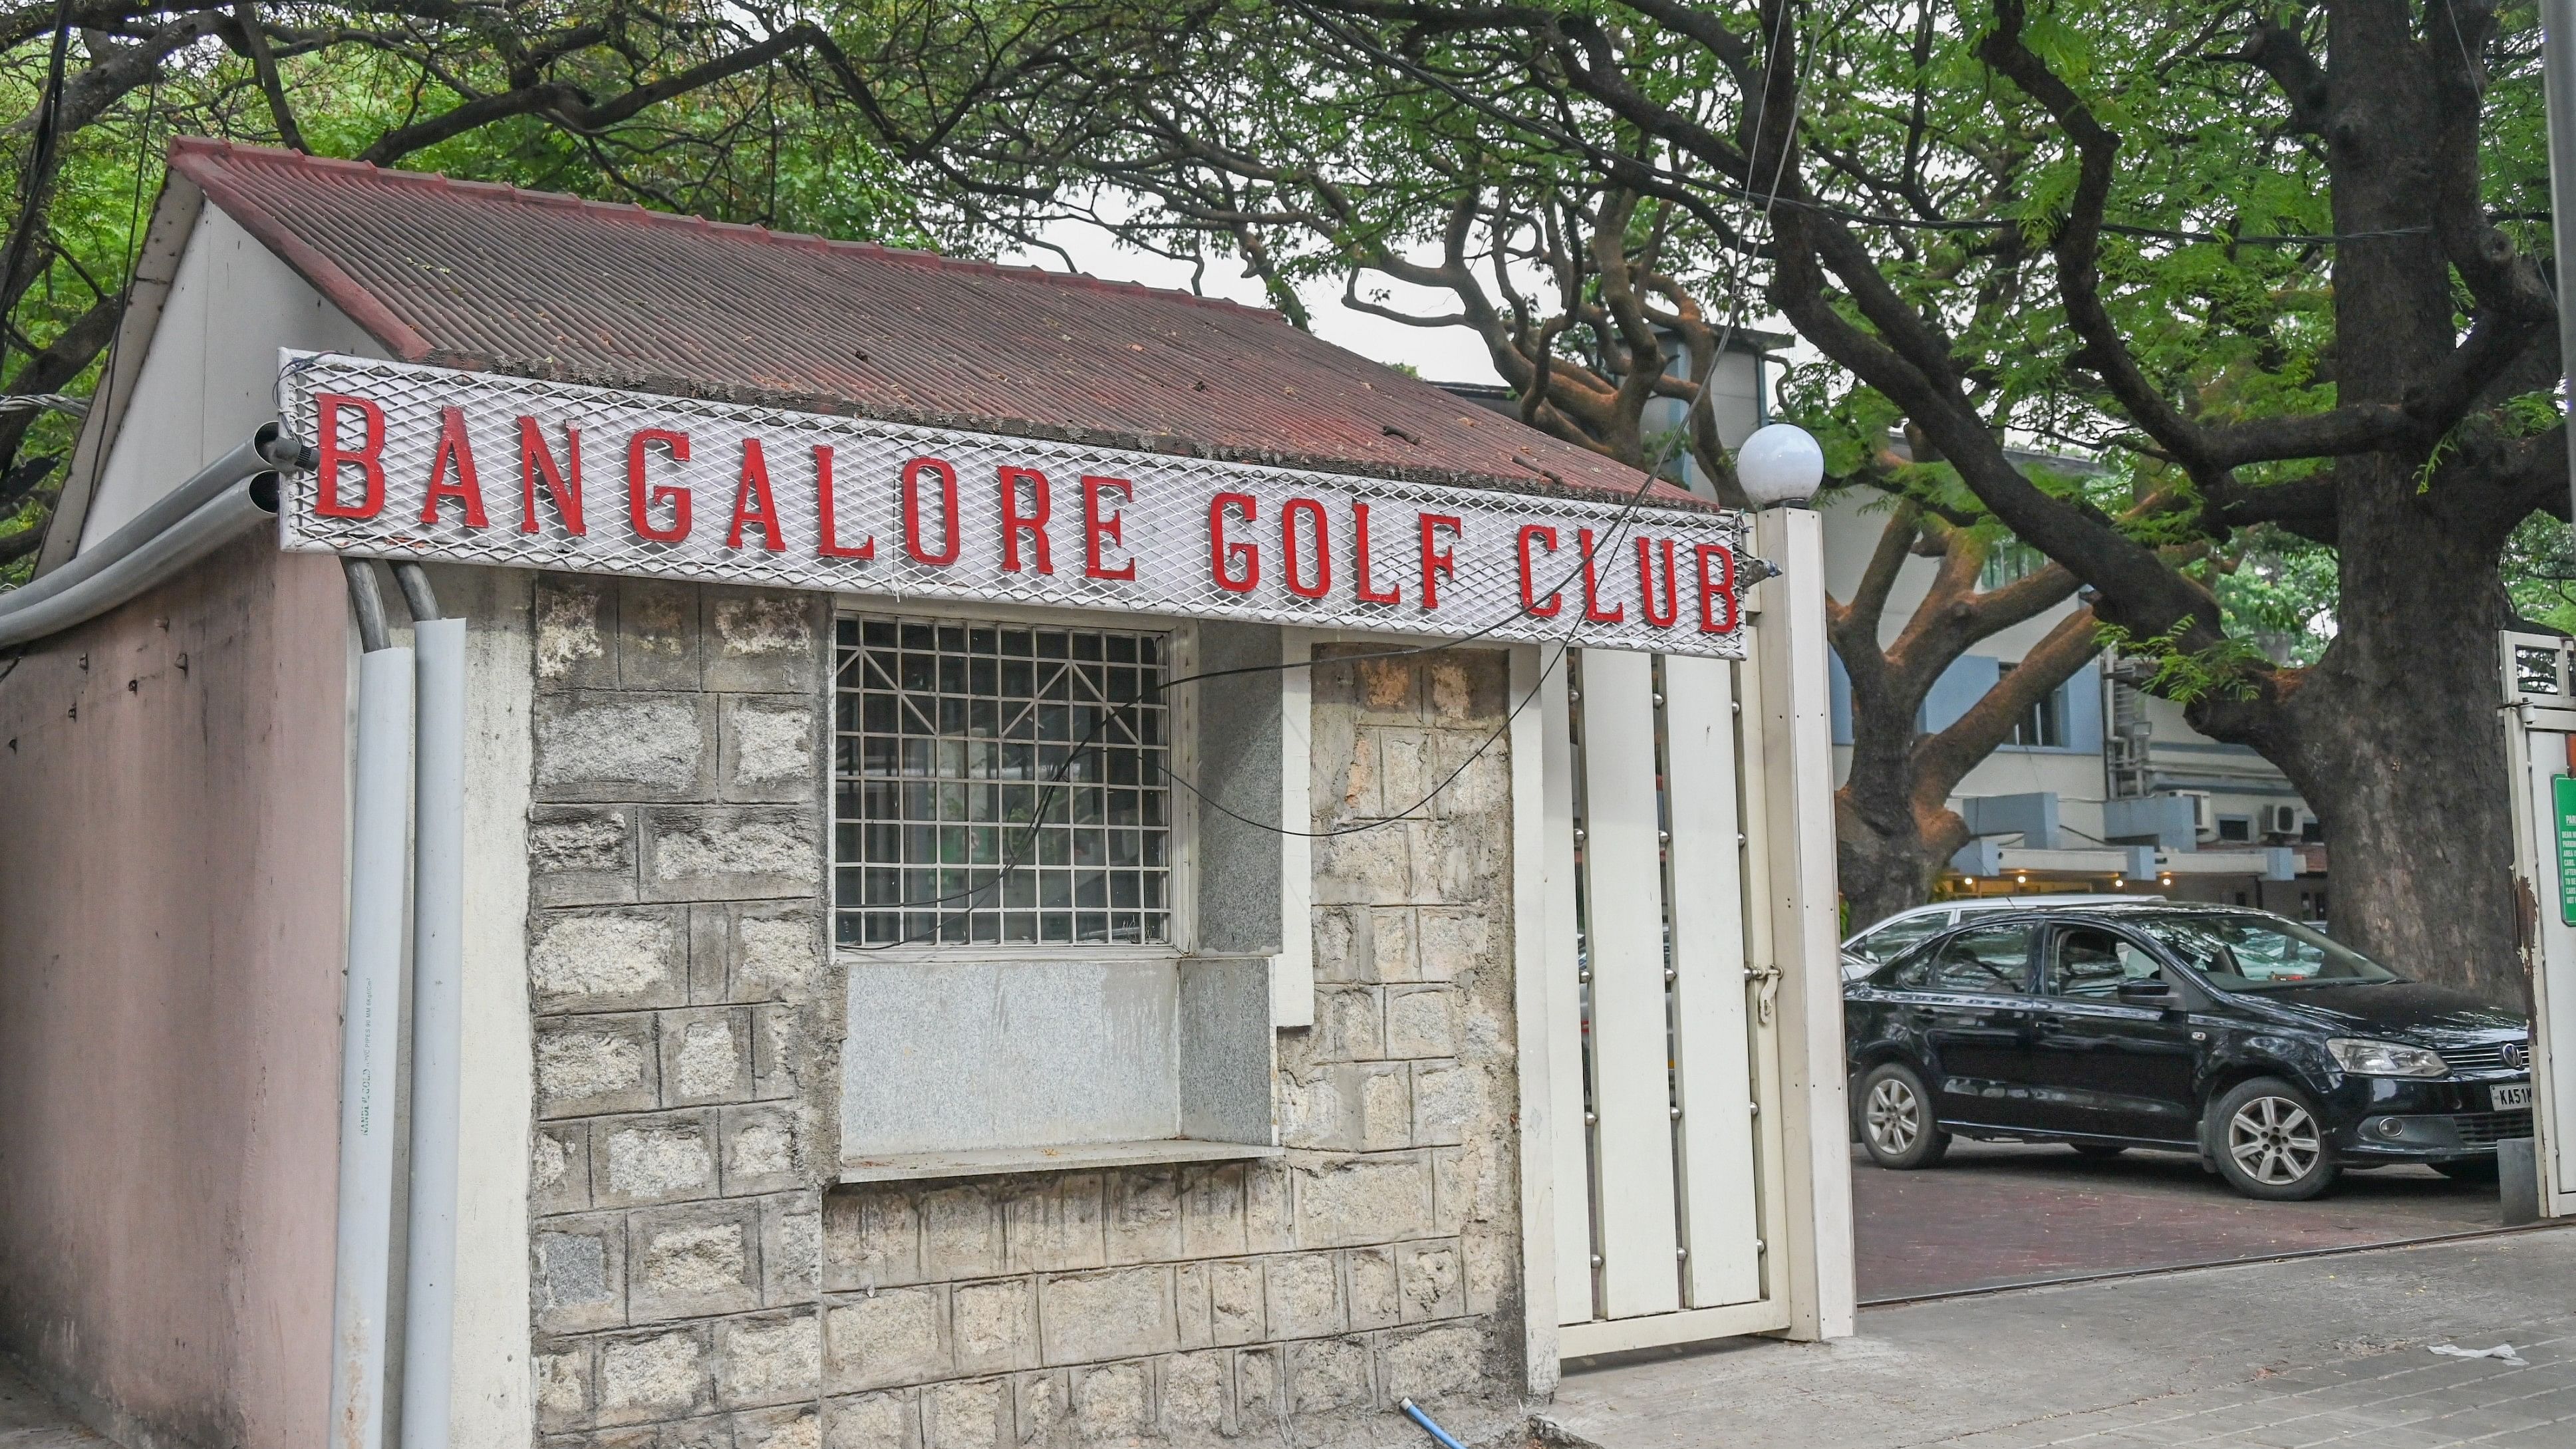 <div class="paragraphs"><p>The entrance to the Bangalore Golf Club. </p></div>